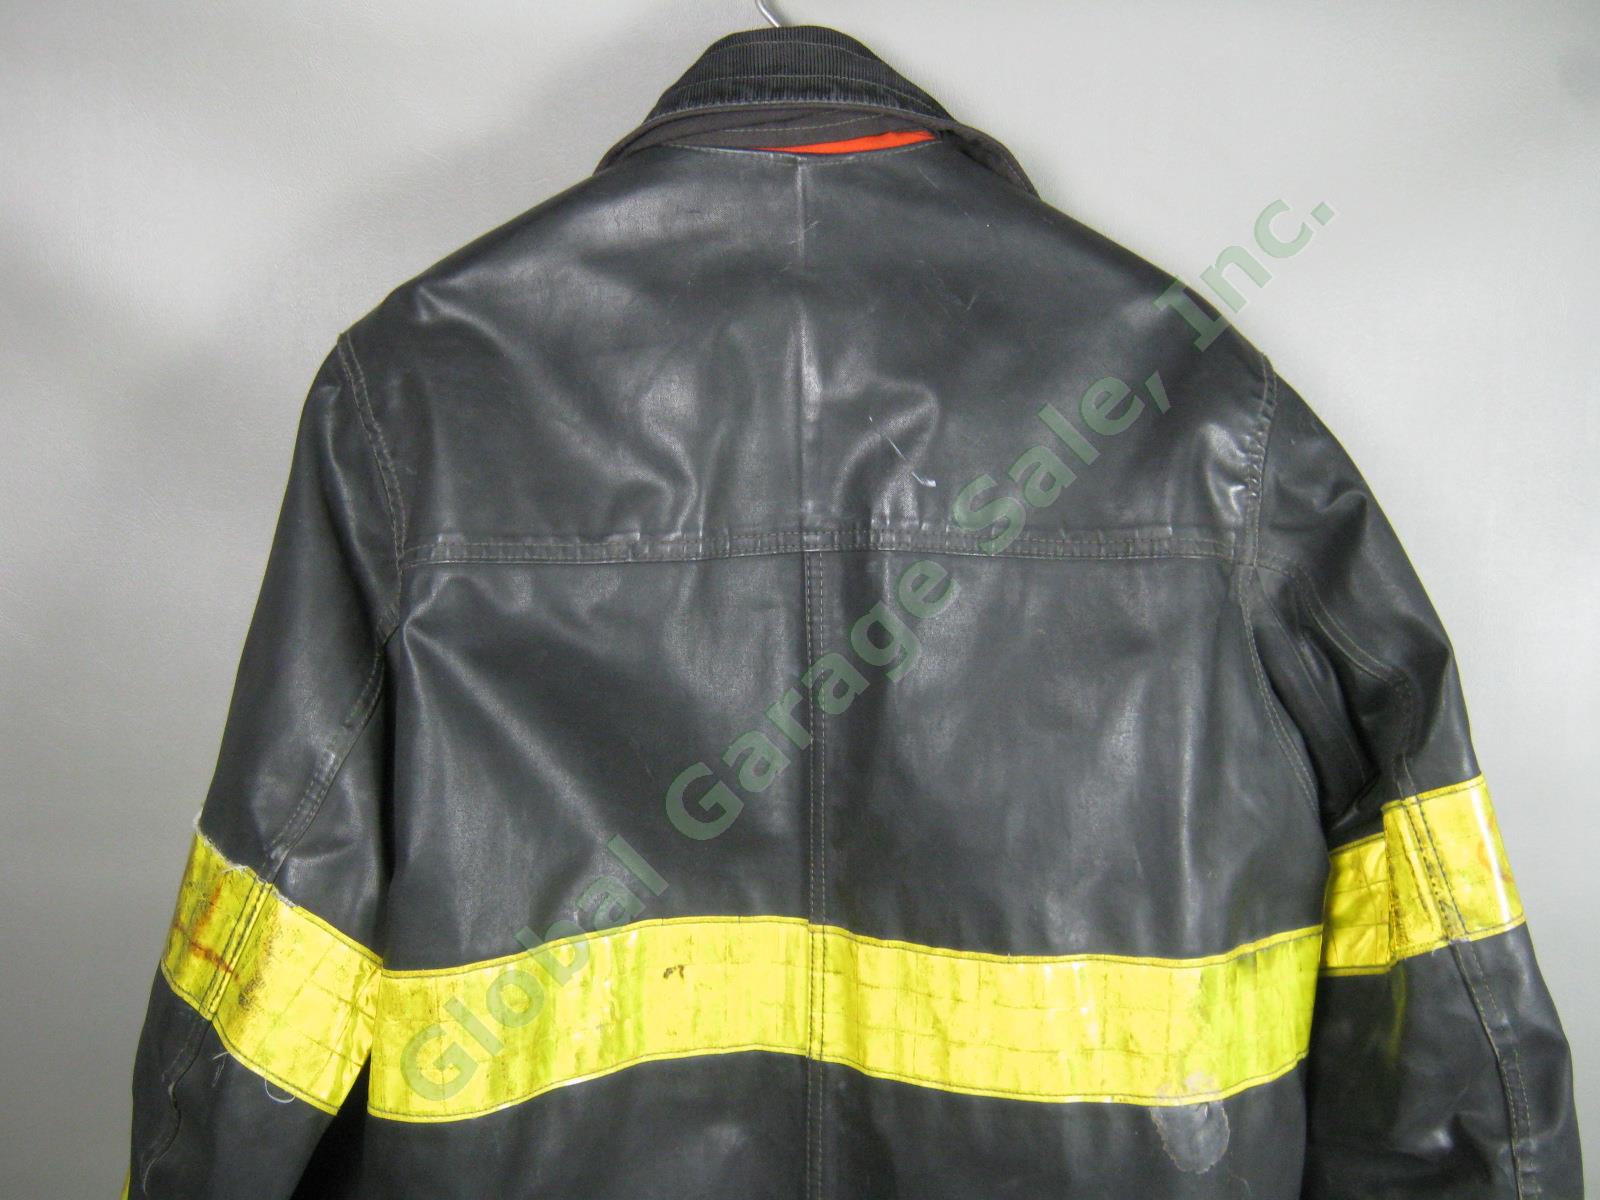 Vtg 1988 Cairns Chicago Fire Dept Winter Firefighter Bunker Jacket Coat 42/36/44 4